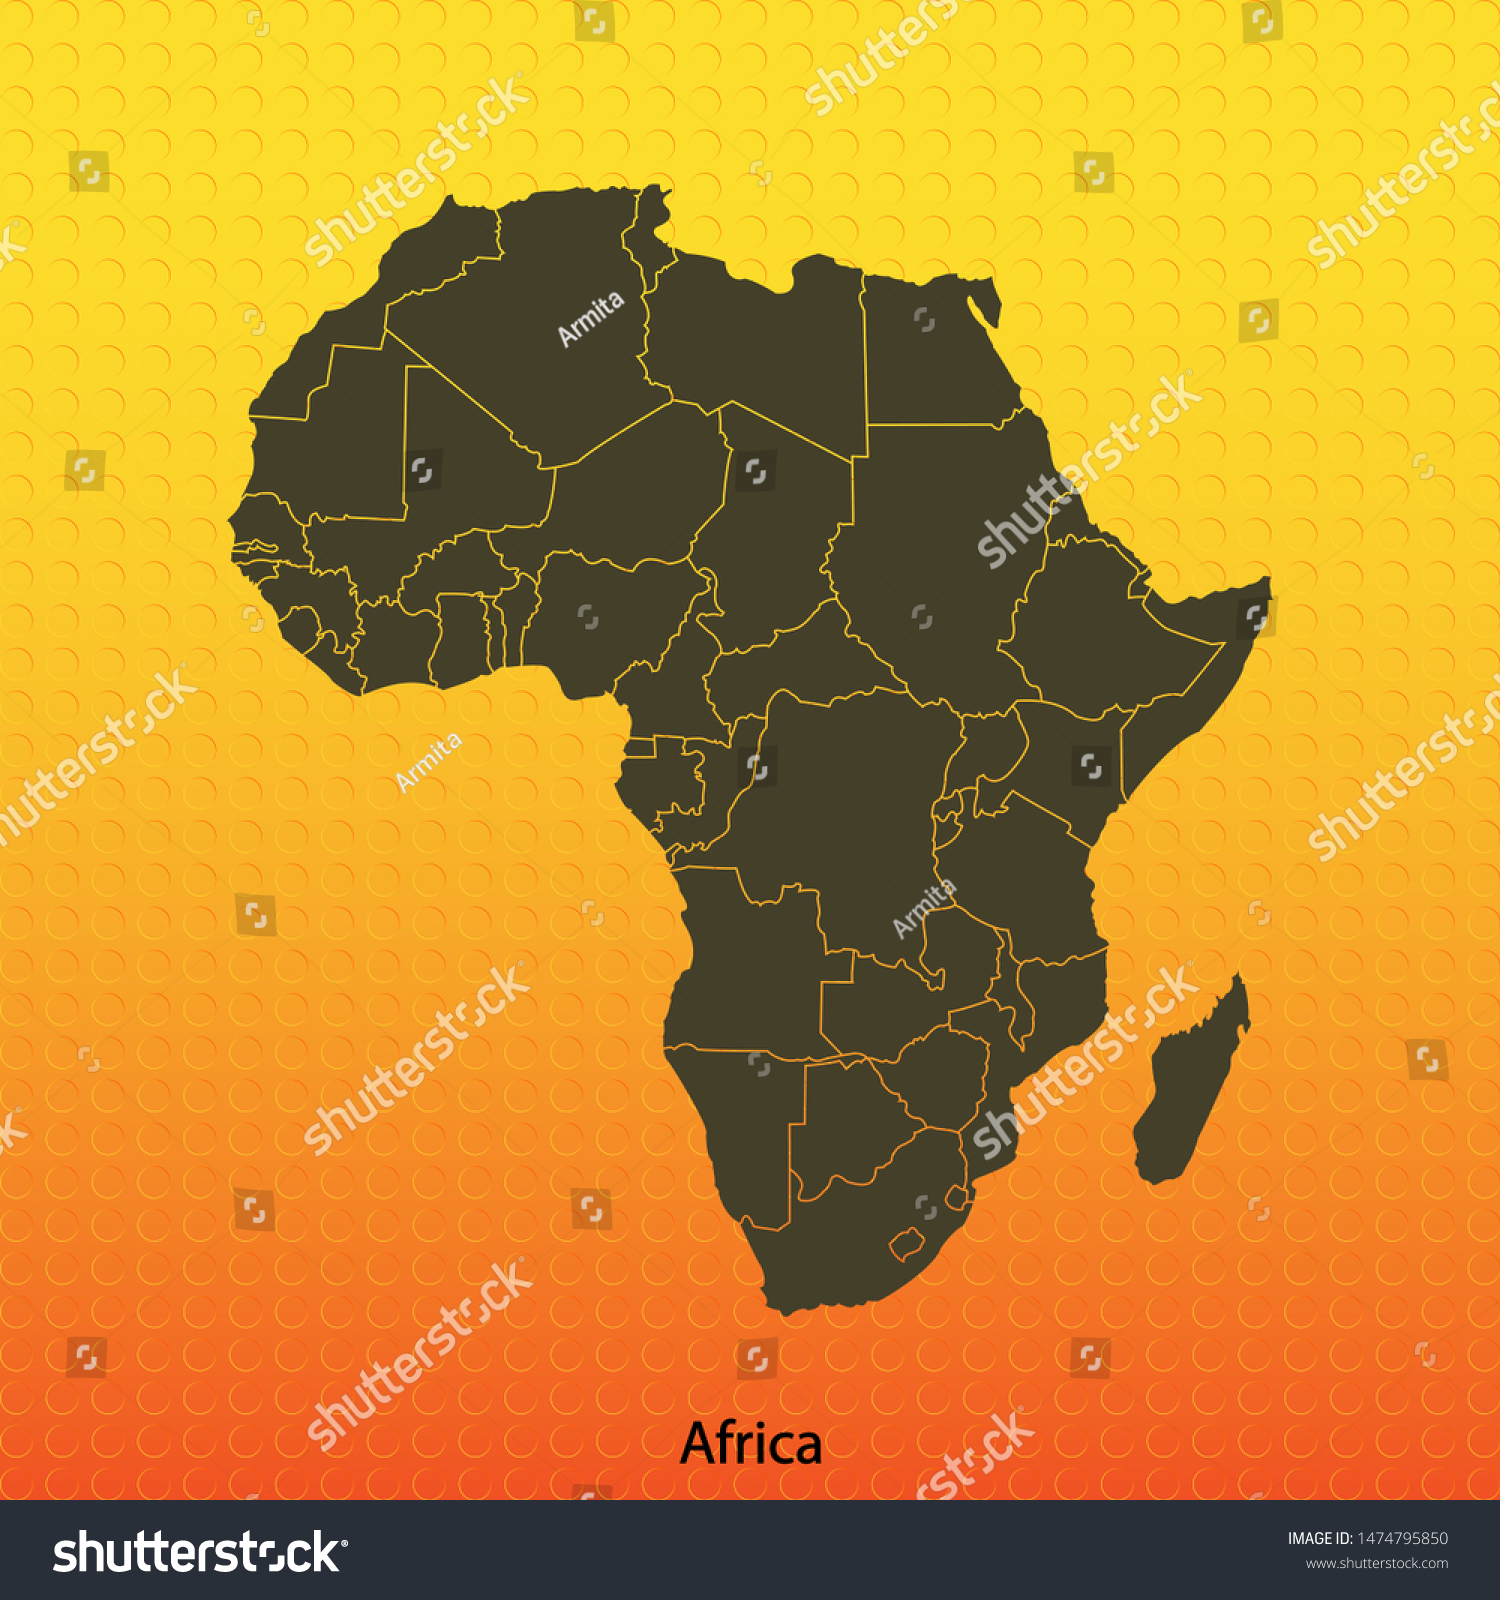 Map Africa Vector Illustration Stock Vector Royalty Free 1474795850 Shutterstock 2440